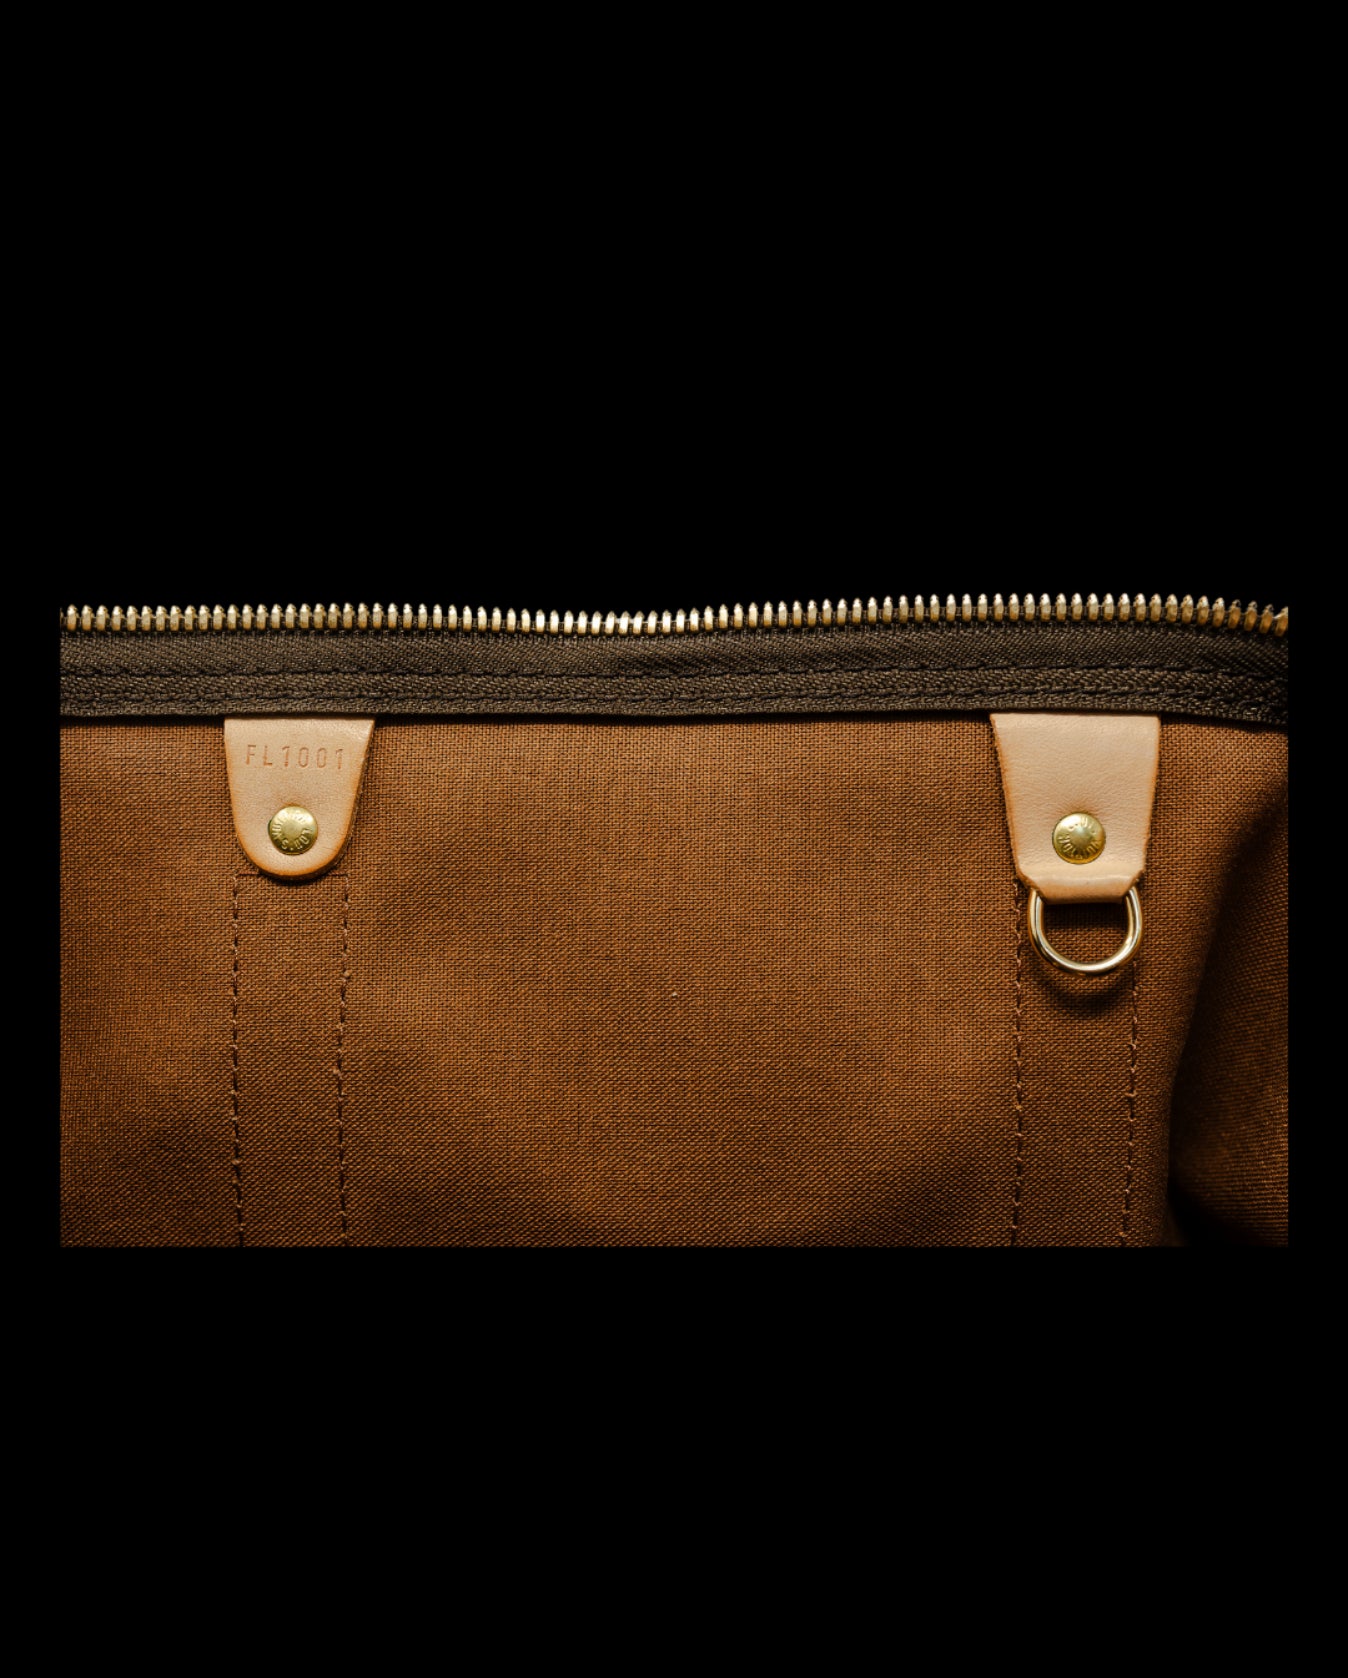 LV Vintage Saddle Bag with Vachetta Leather Trim - Luggage